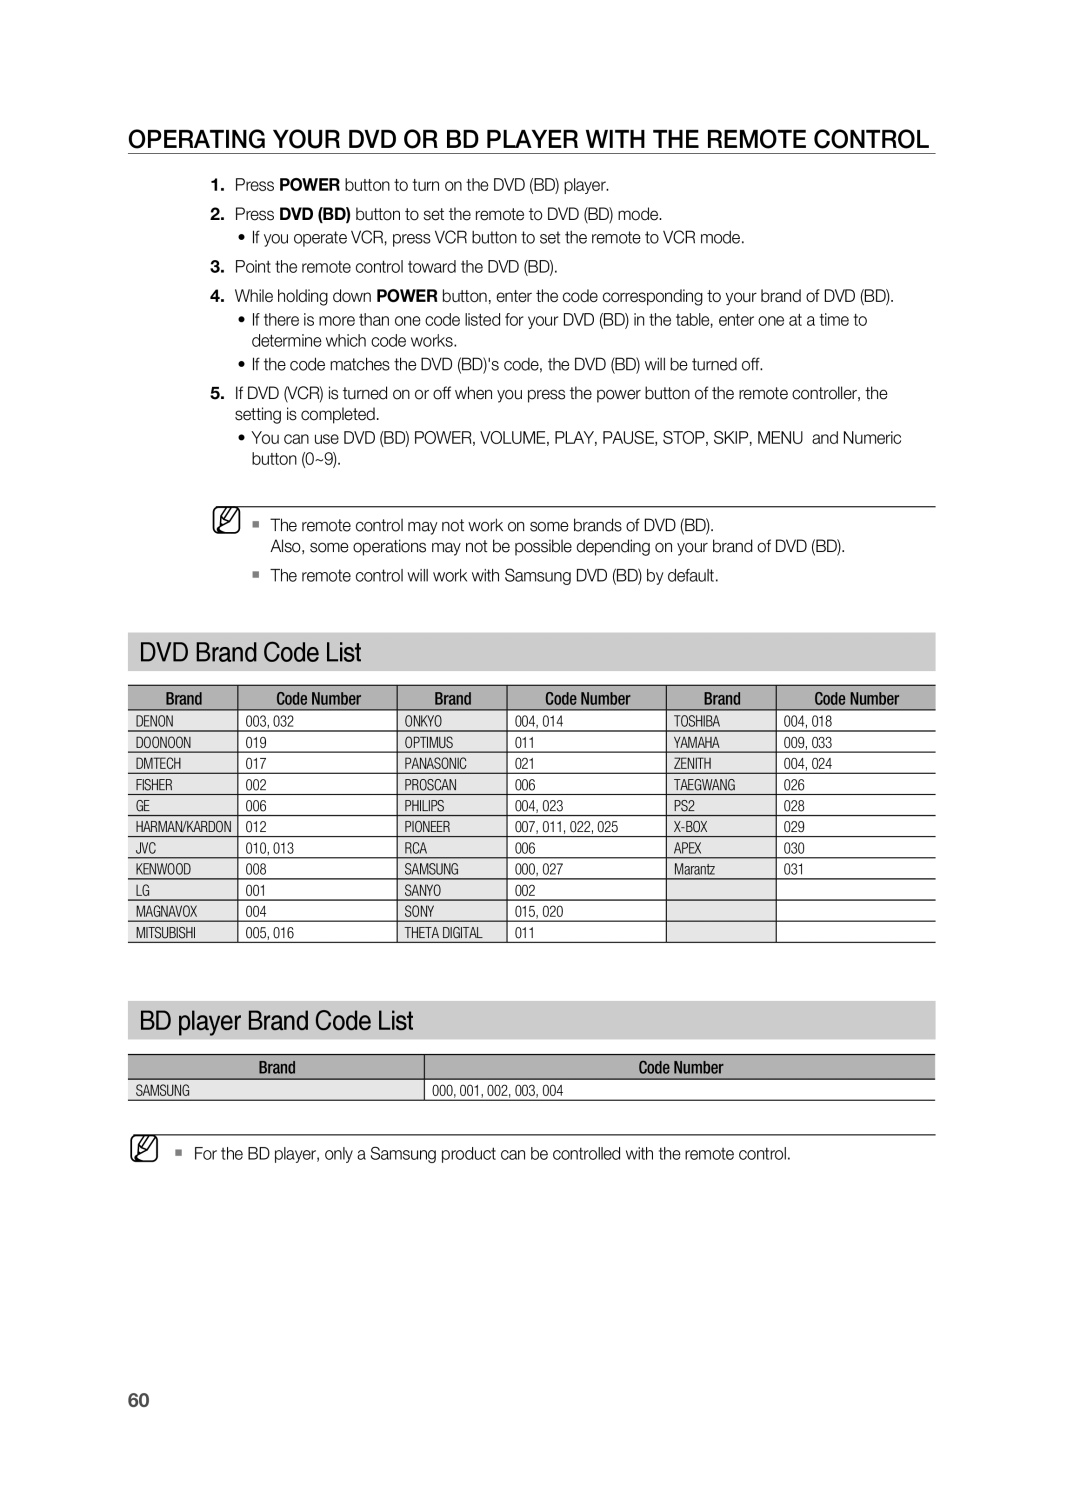 Samsung HT-AS730S user manual DVD Brand Code List, BD player Brand Code List 